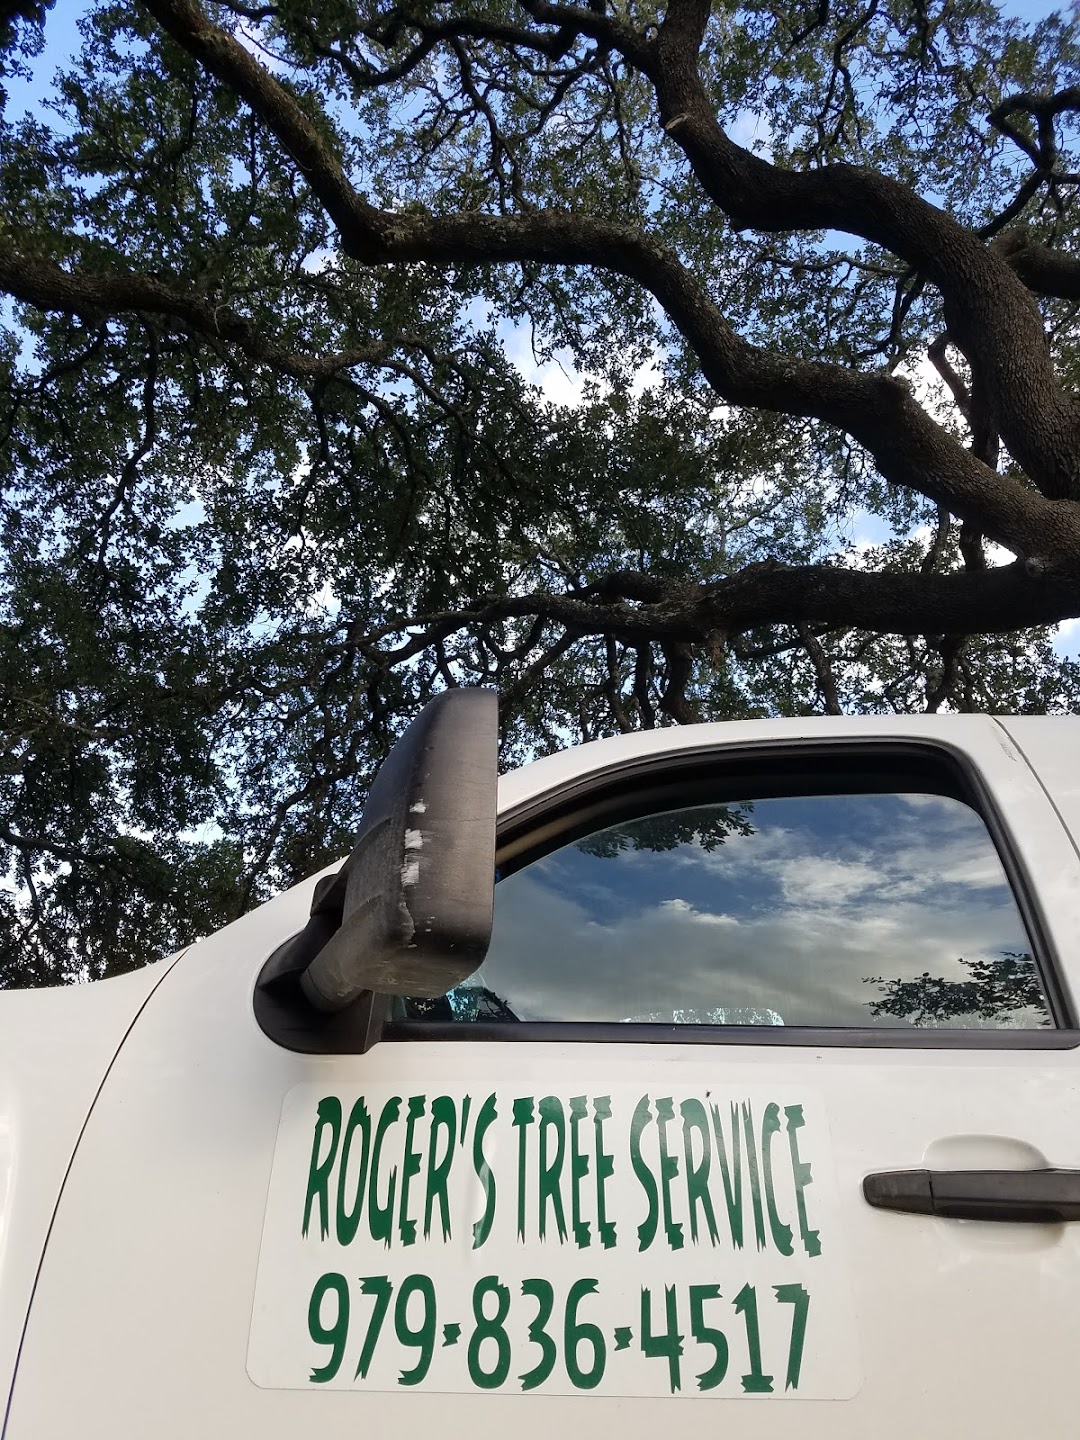 Rogers Tree Service